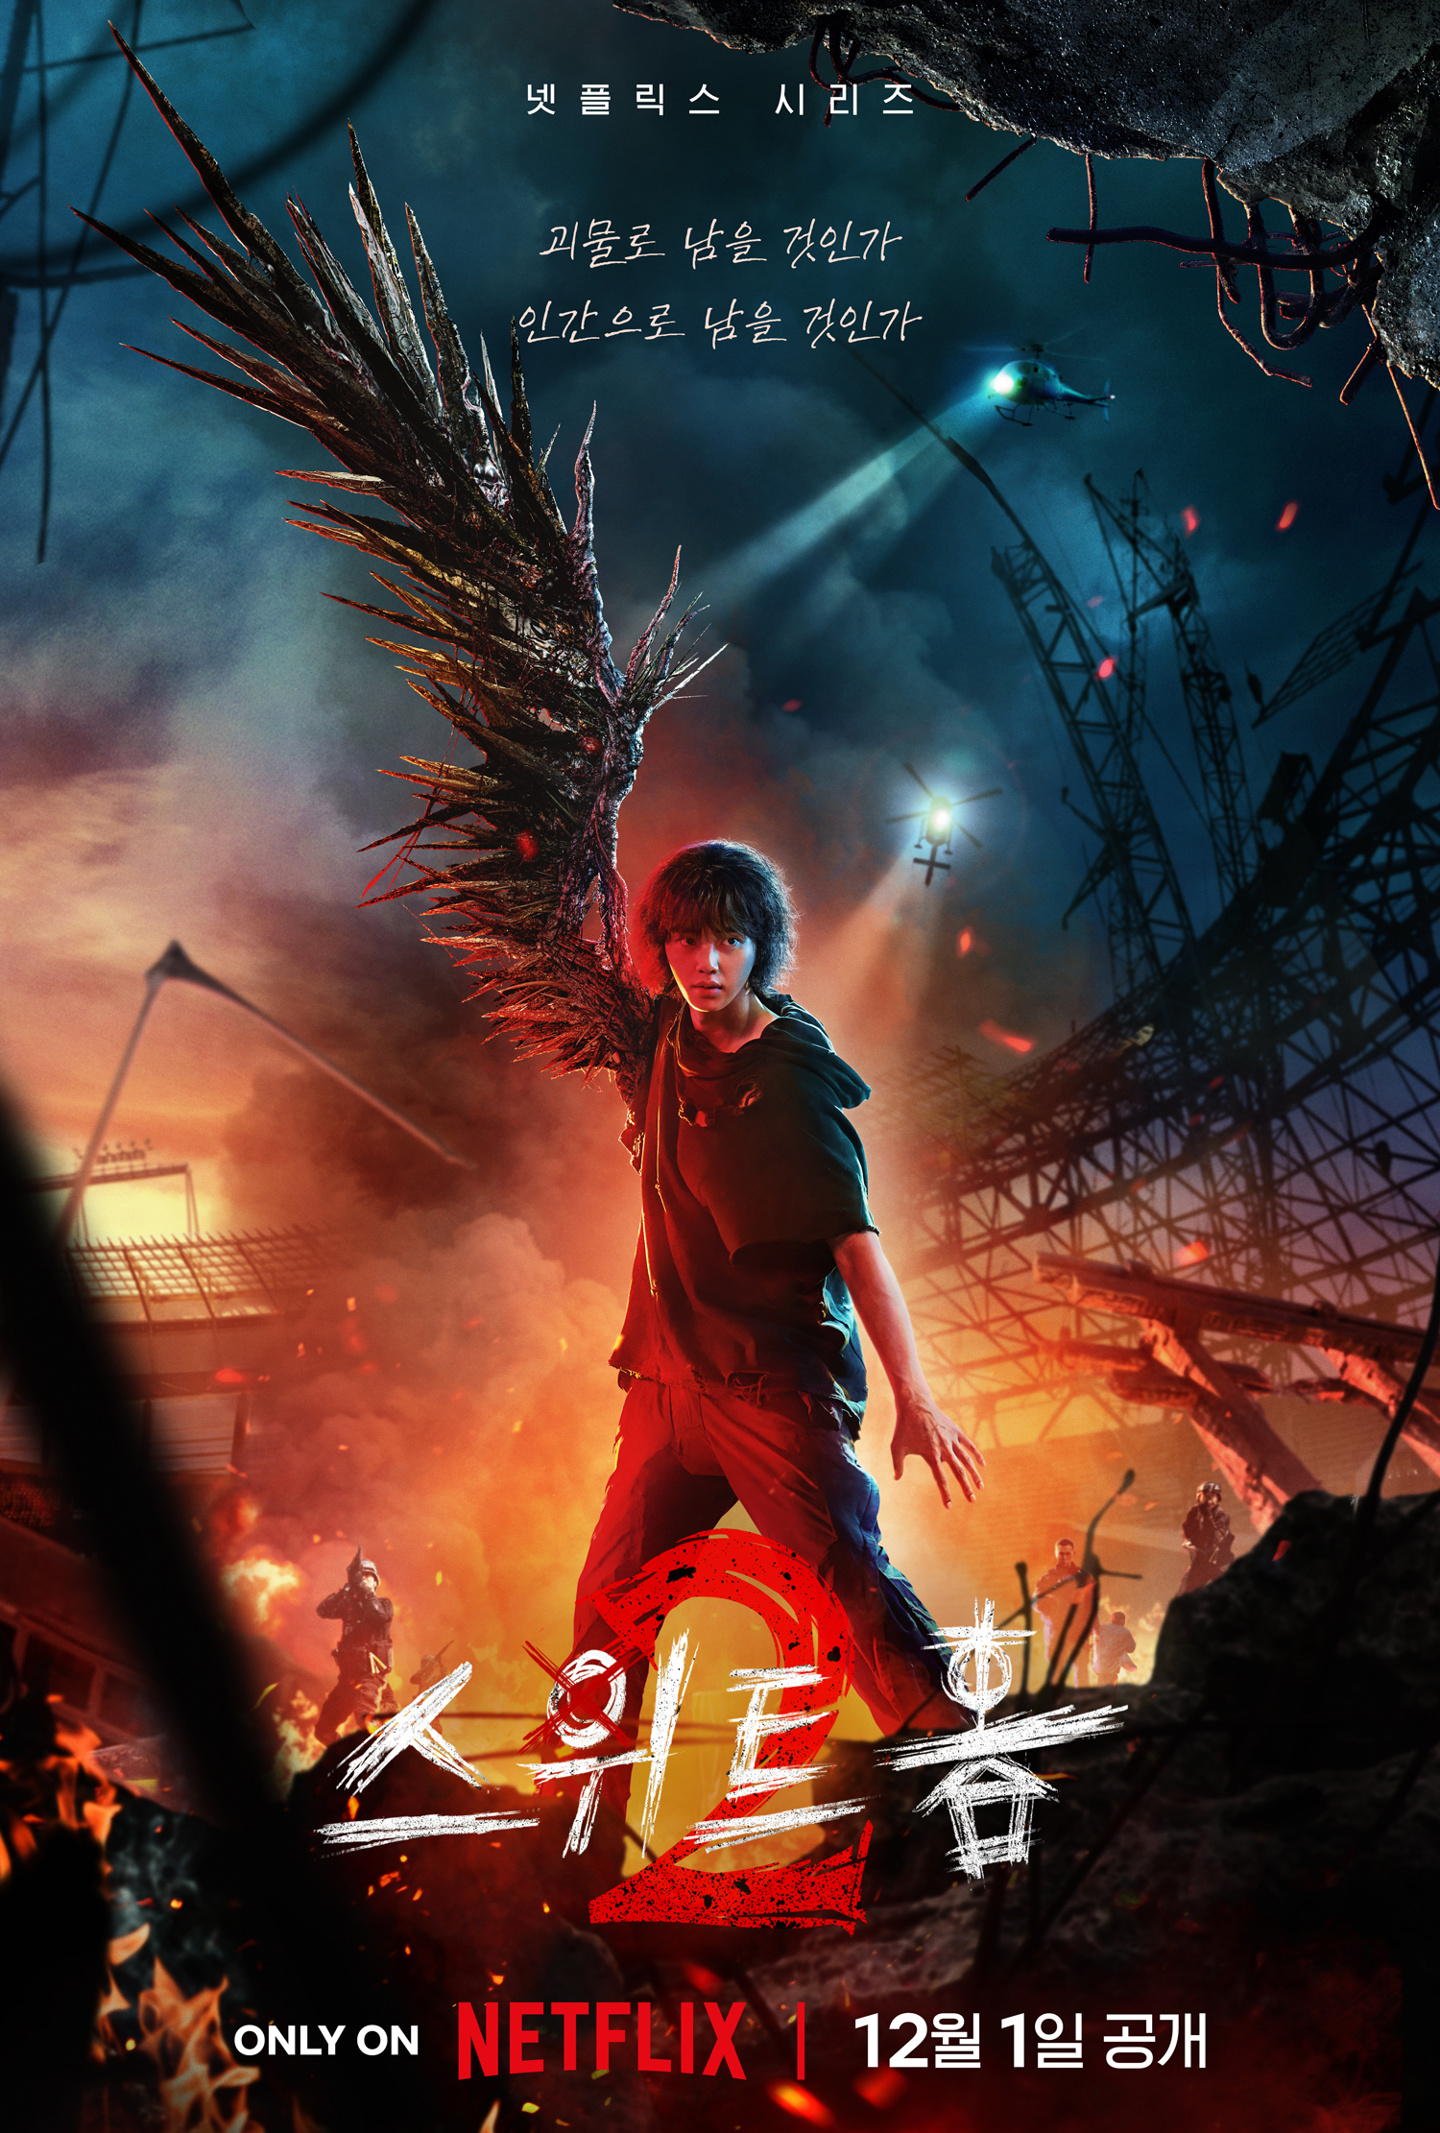 Netflix 人气韩剧《甜蜜家园 2》最新预告发布，预计于 12 月 1 日正式上线播出